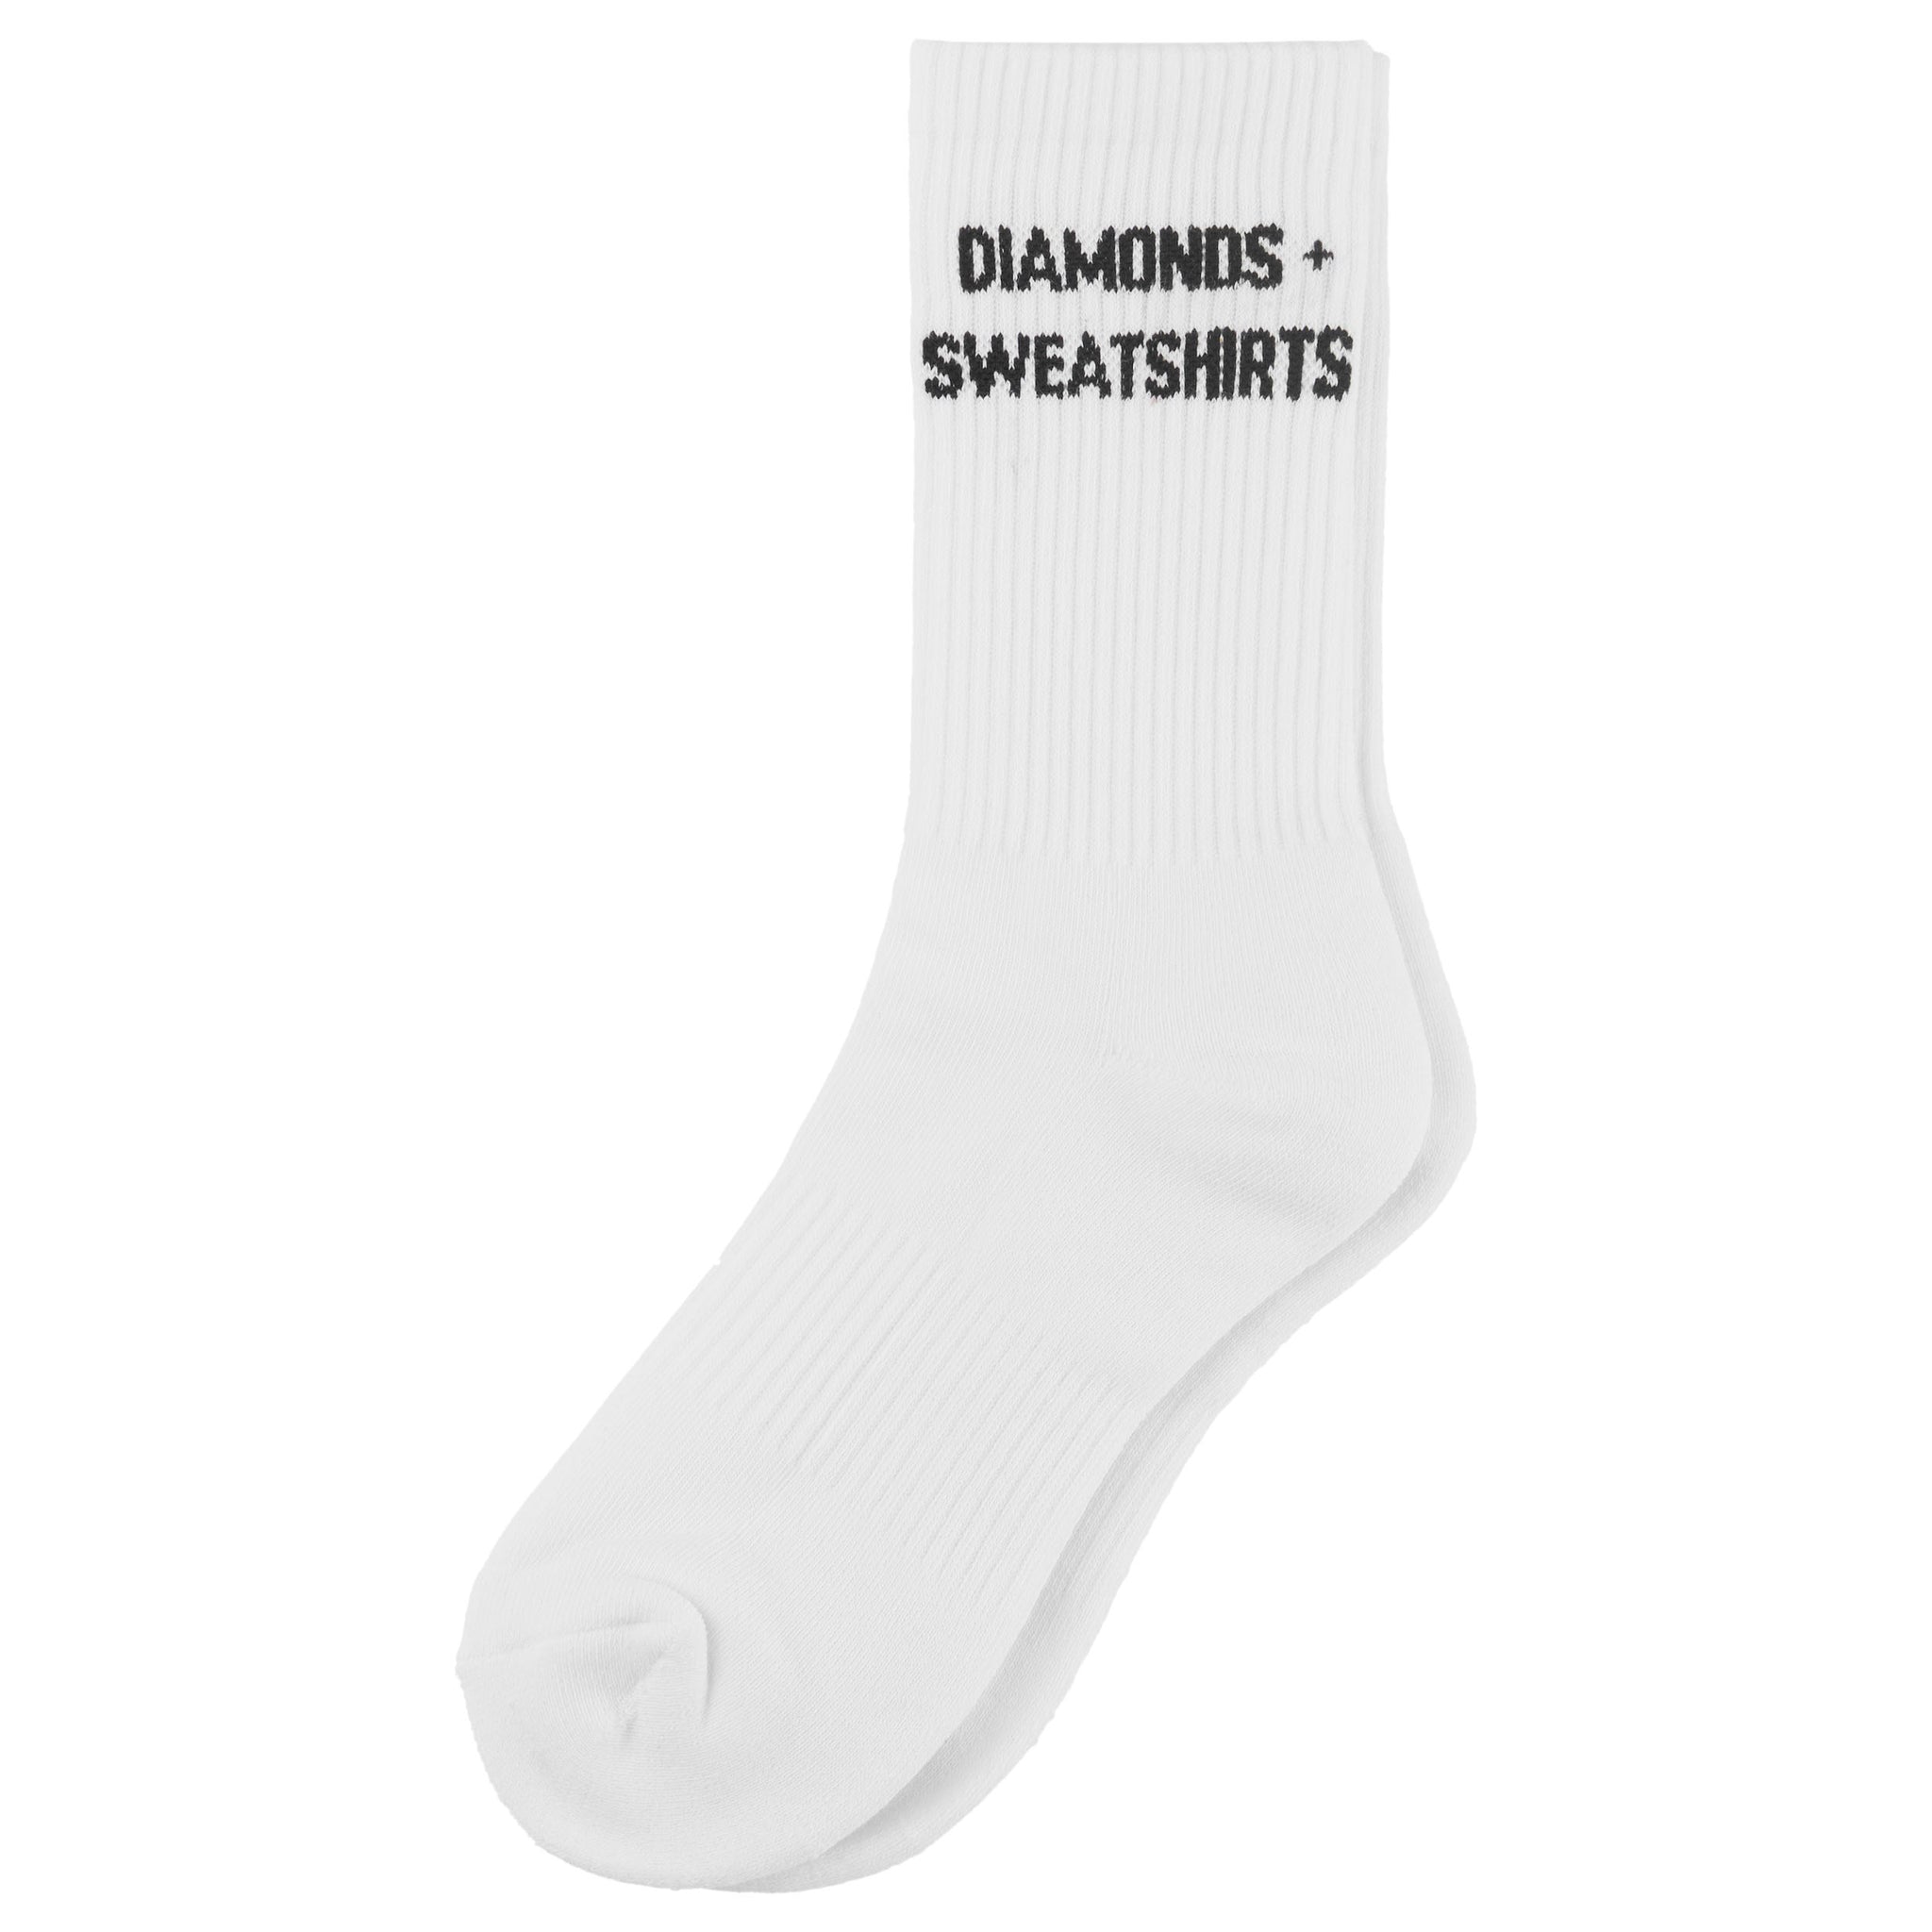 Diamonds + Sweatshirts Socks